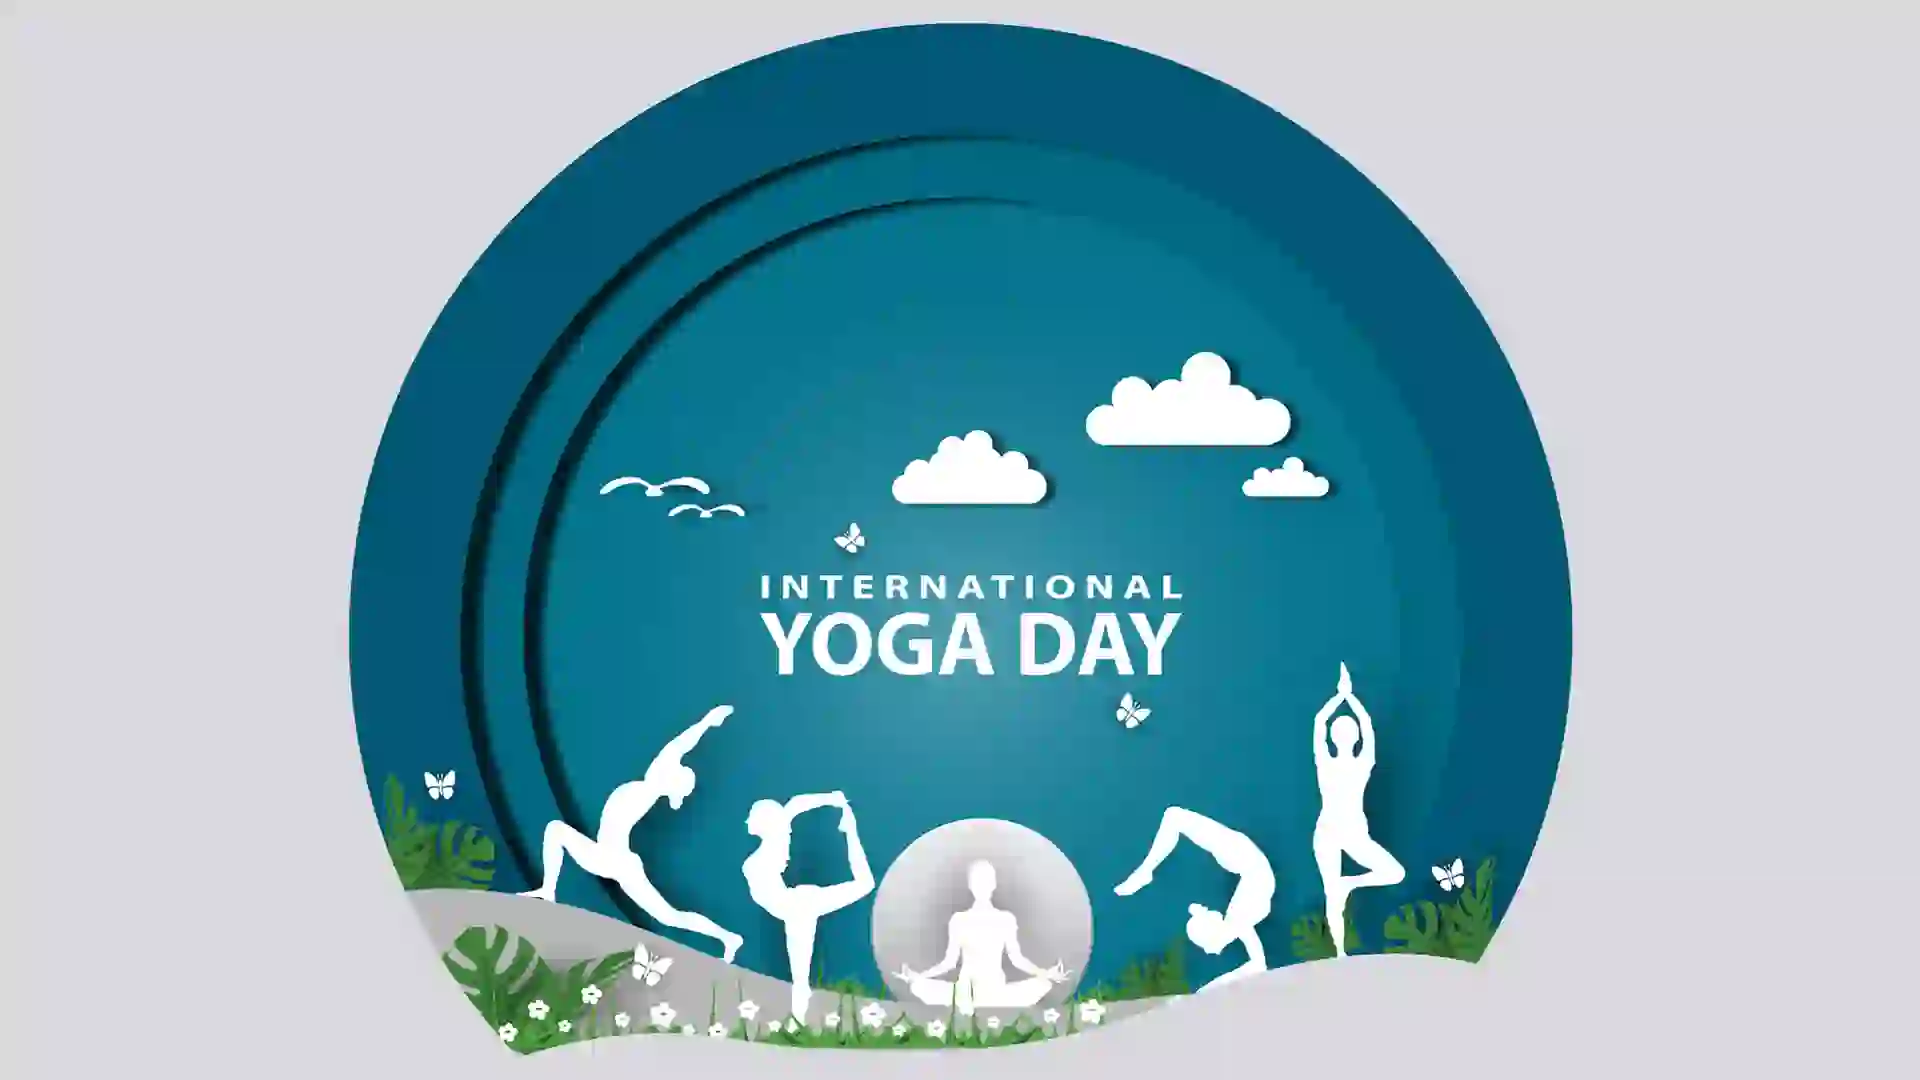 International Yoga Day This Post Design By The Revolution Deshbhakt Hindustani